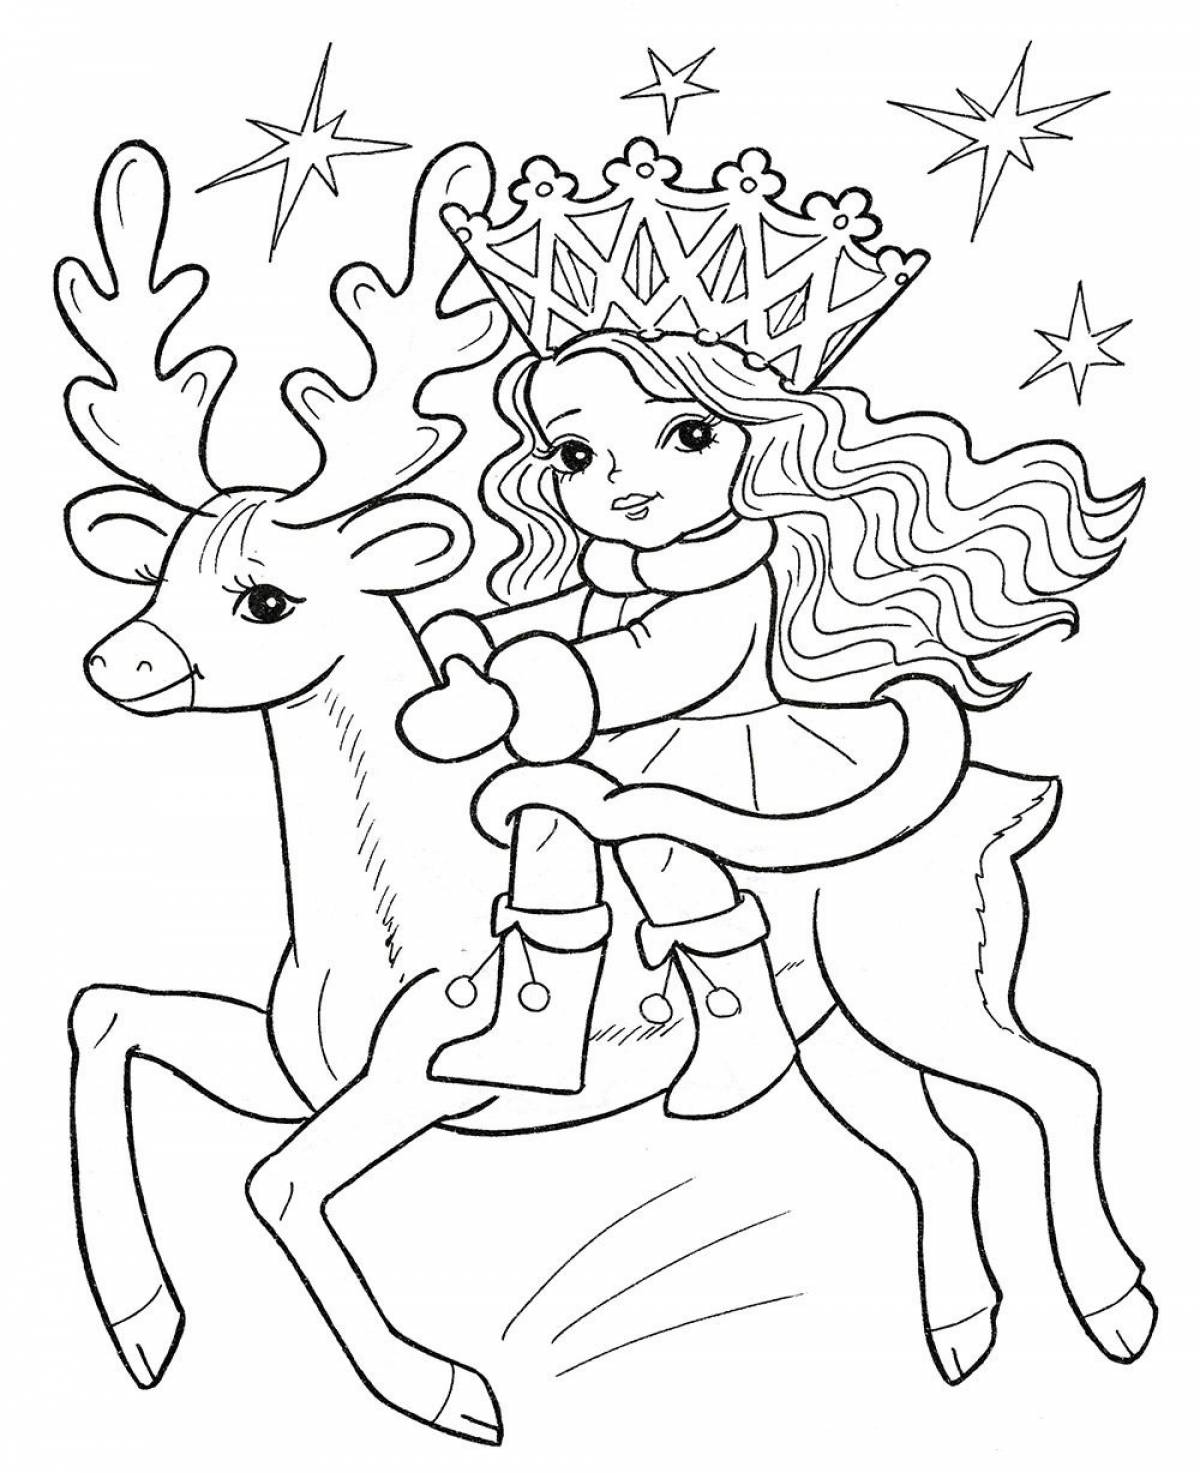 Princess on a horse